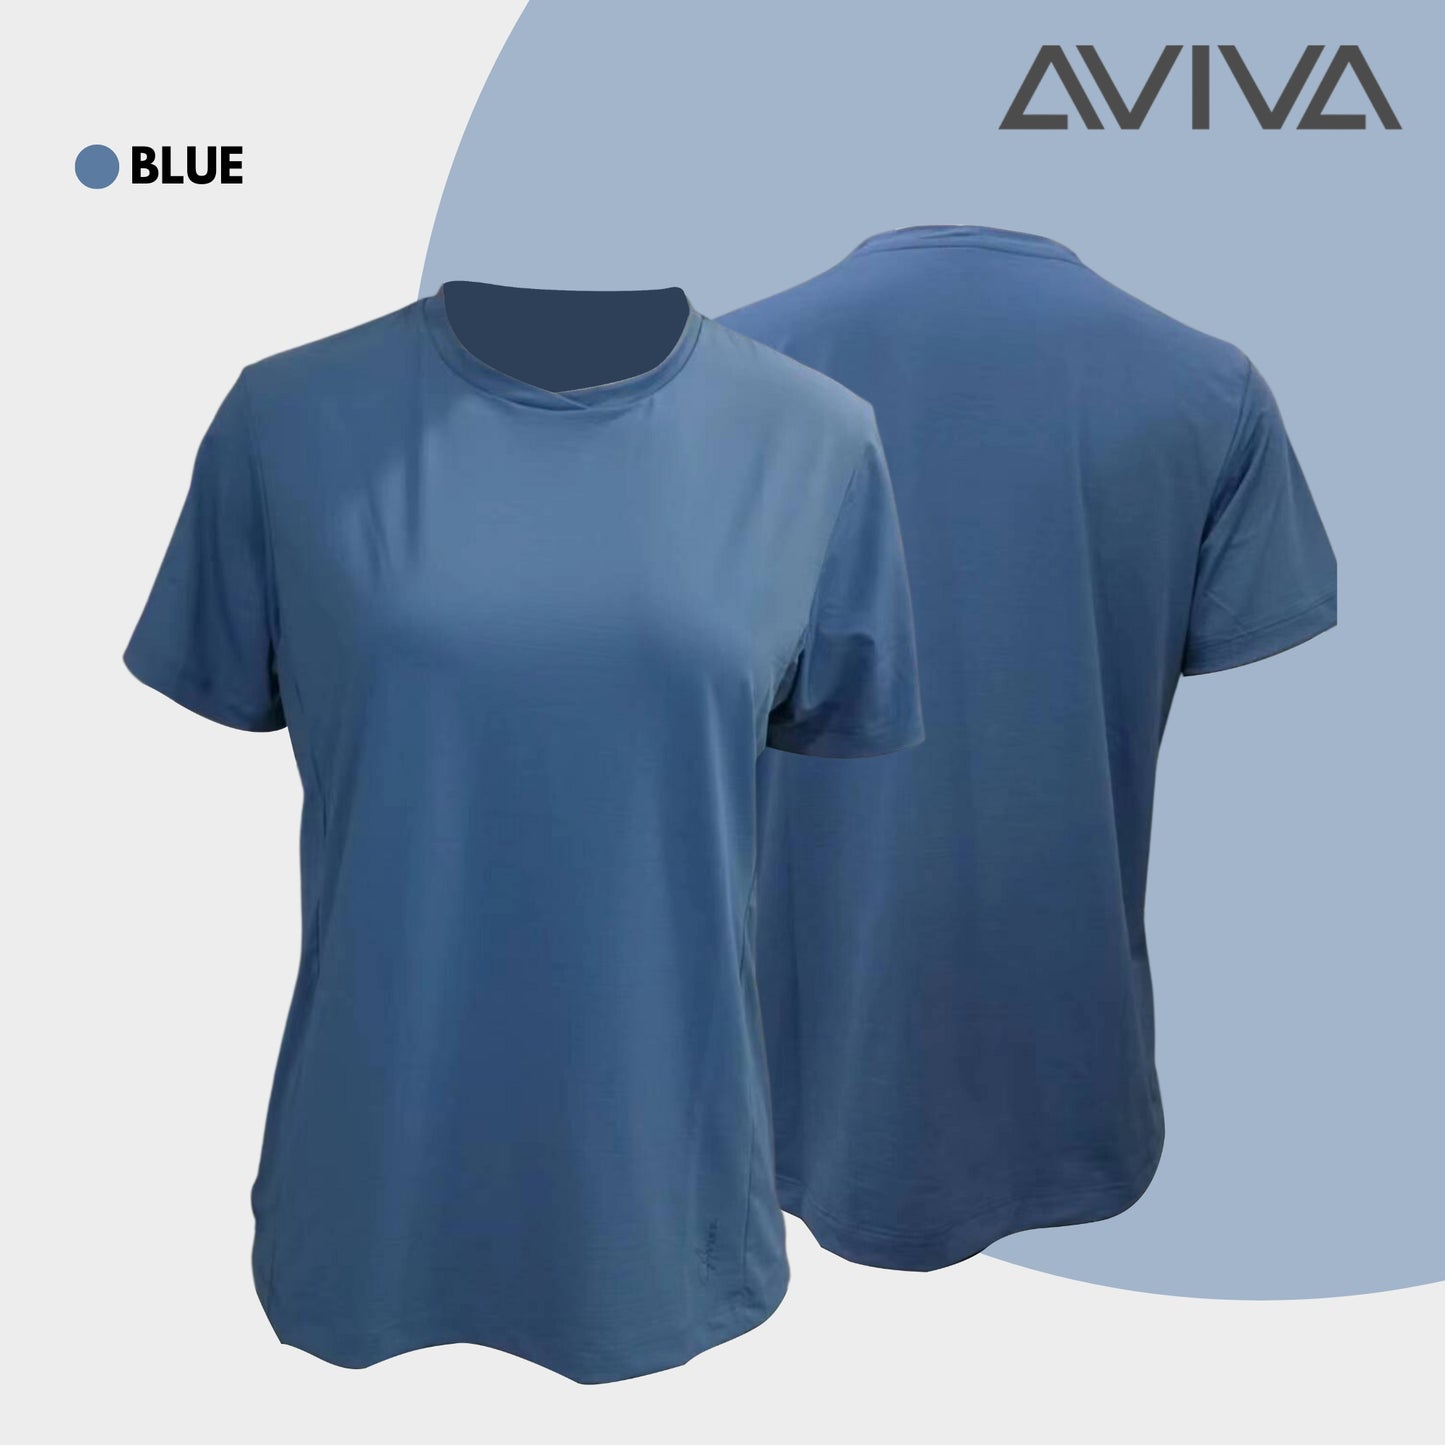 AVIVA Active Soft & Comfortable Short Sleeve Tee (81-8116)